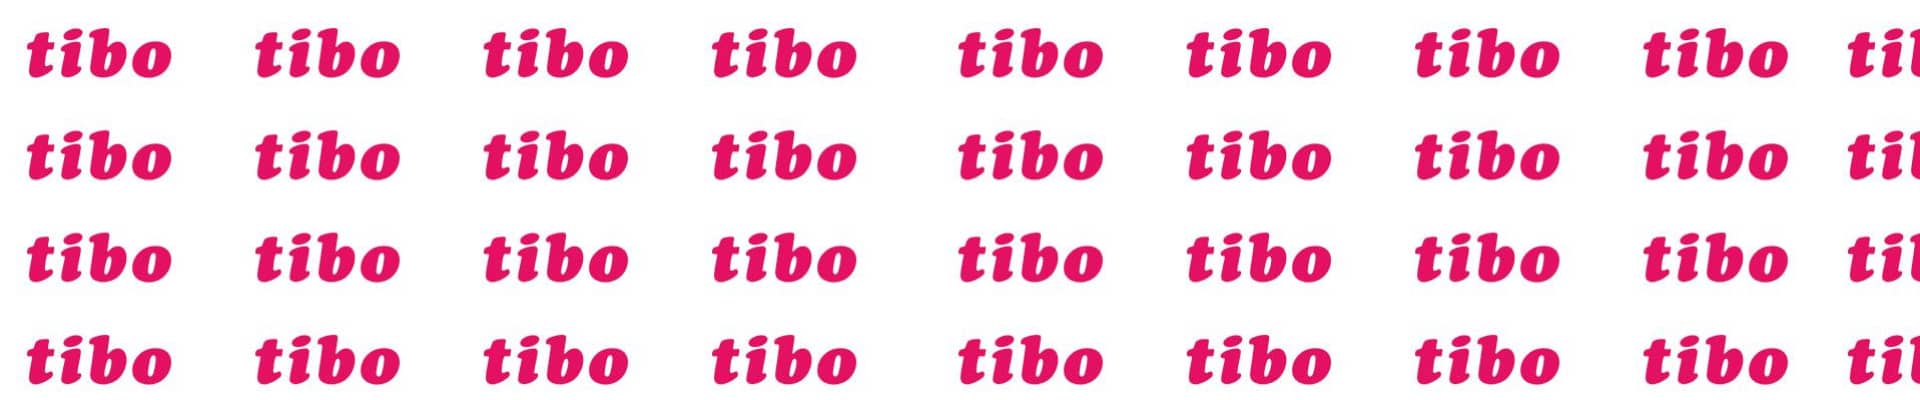 TIBO 2019